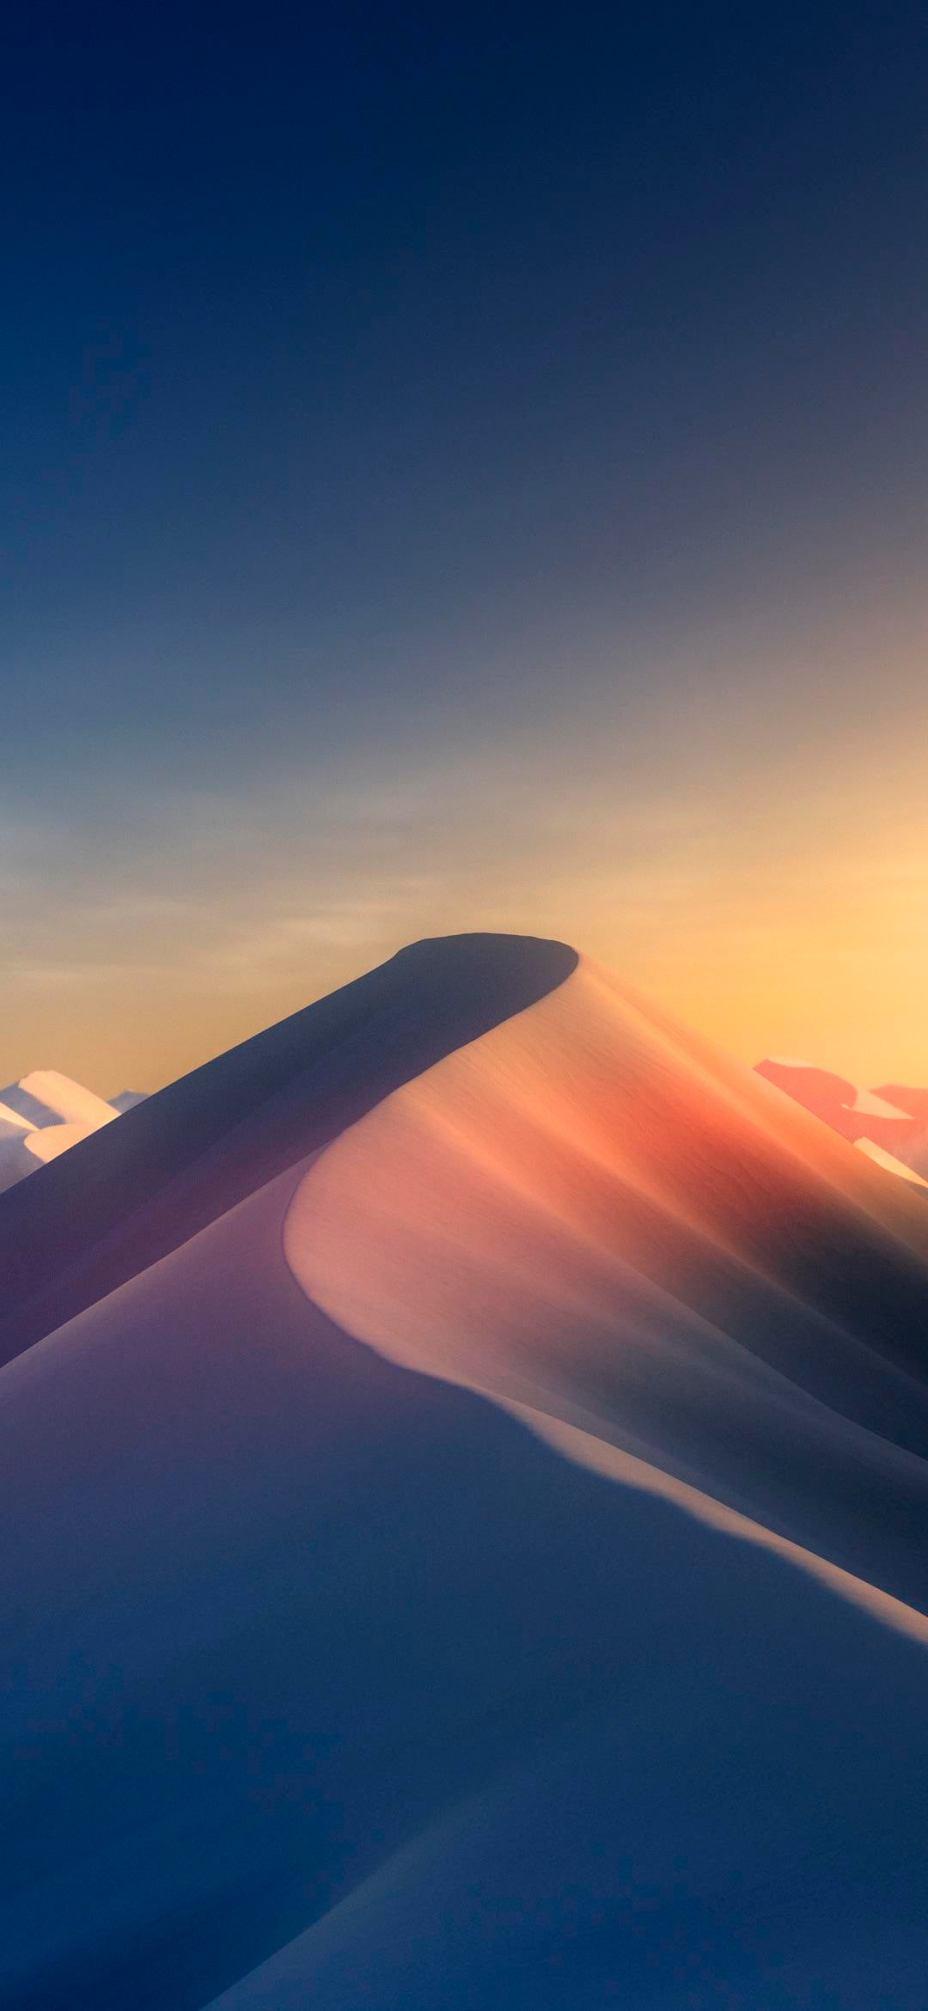 Dune 2021 Wallpapers - Top Free Dune 2021 Backgrounds - WallpaperAccess